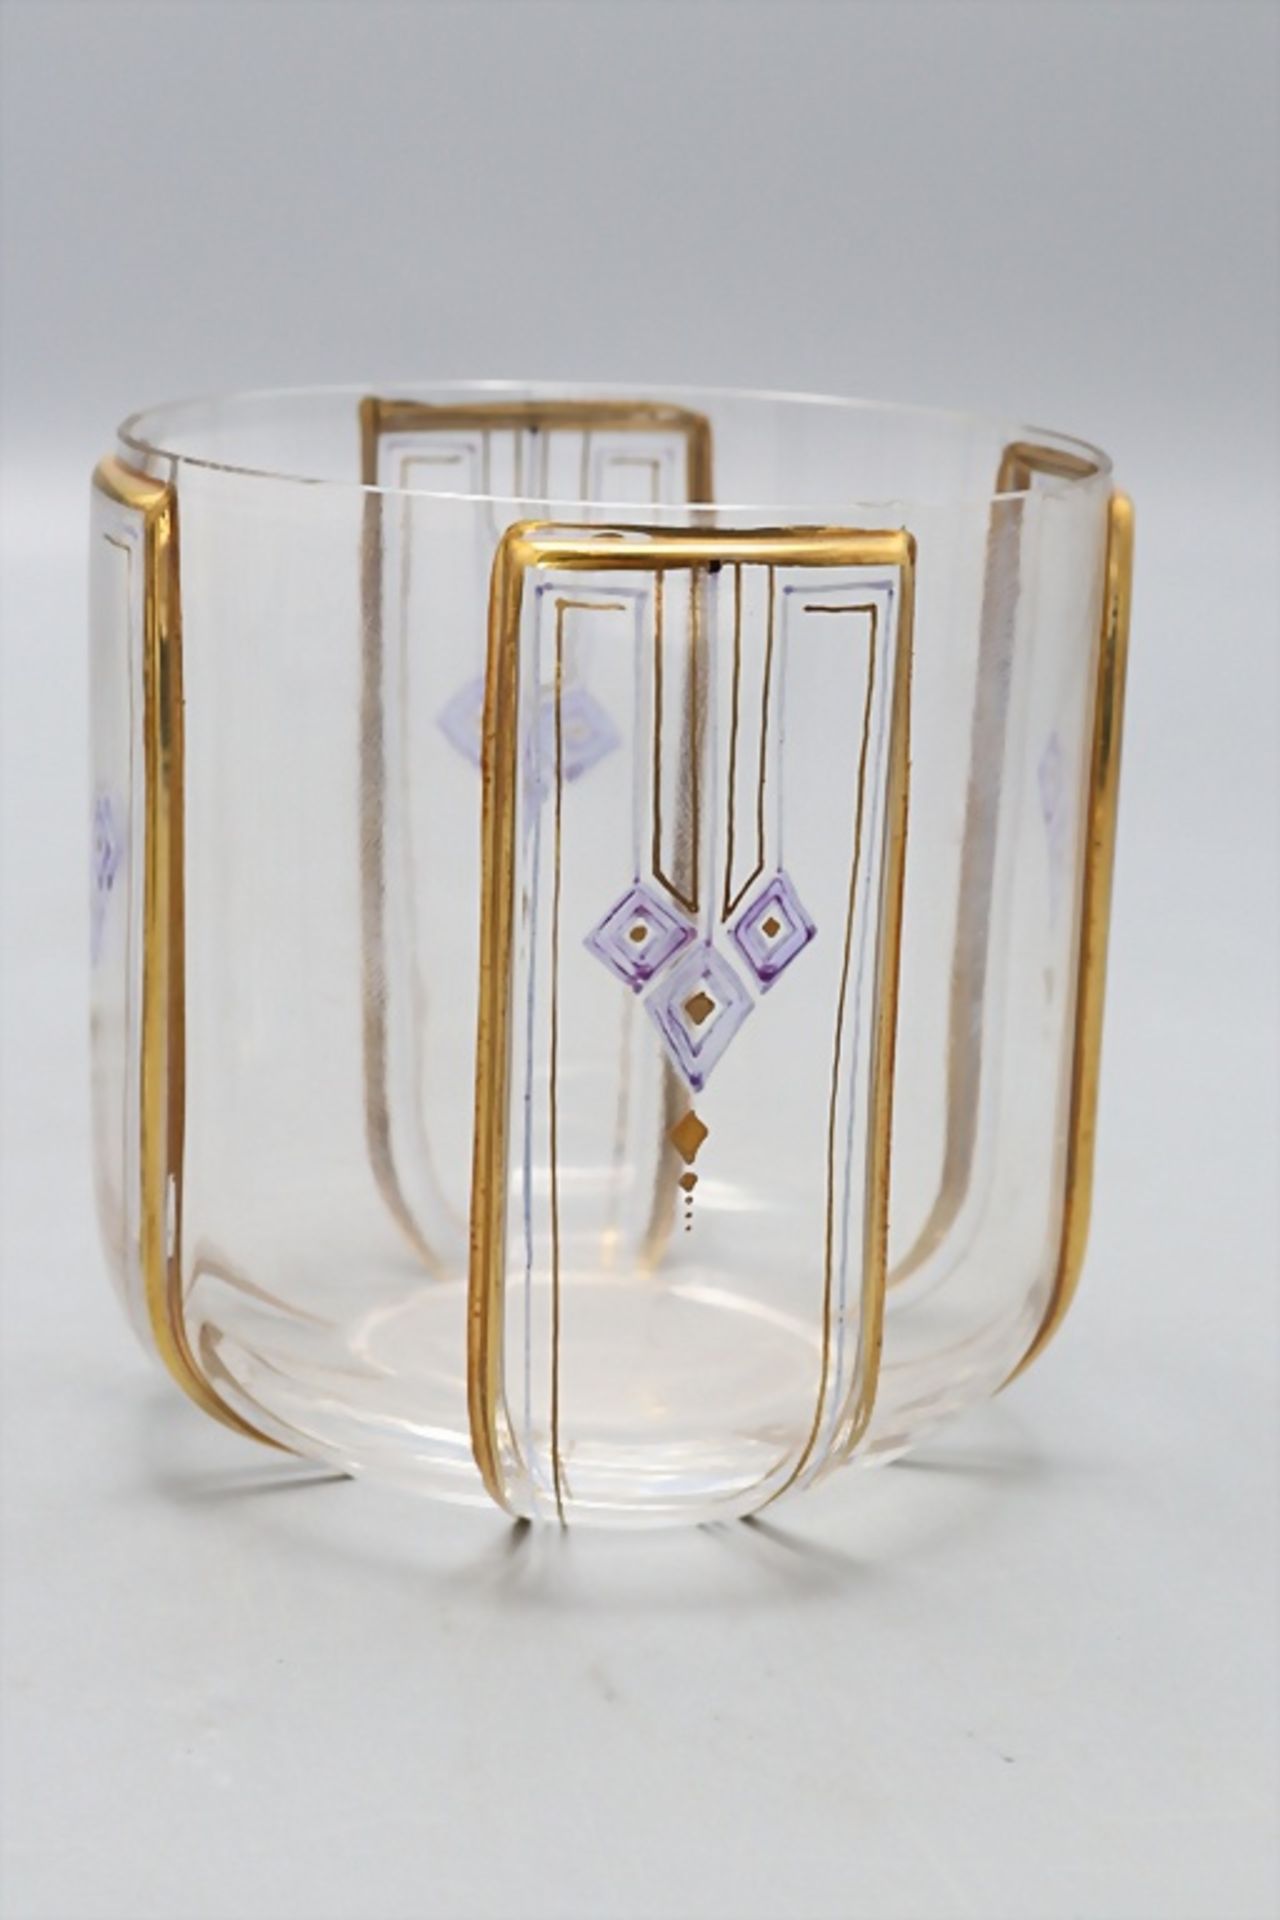 Zwei Art Déco Vasen / Two Art Deco glass vases, 20. Jh. - Bild 3 aus 6